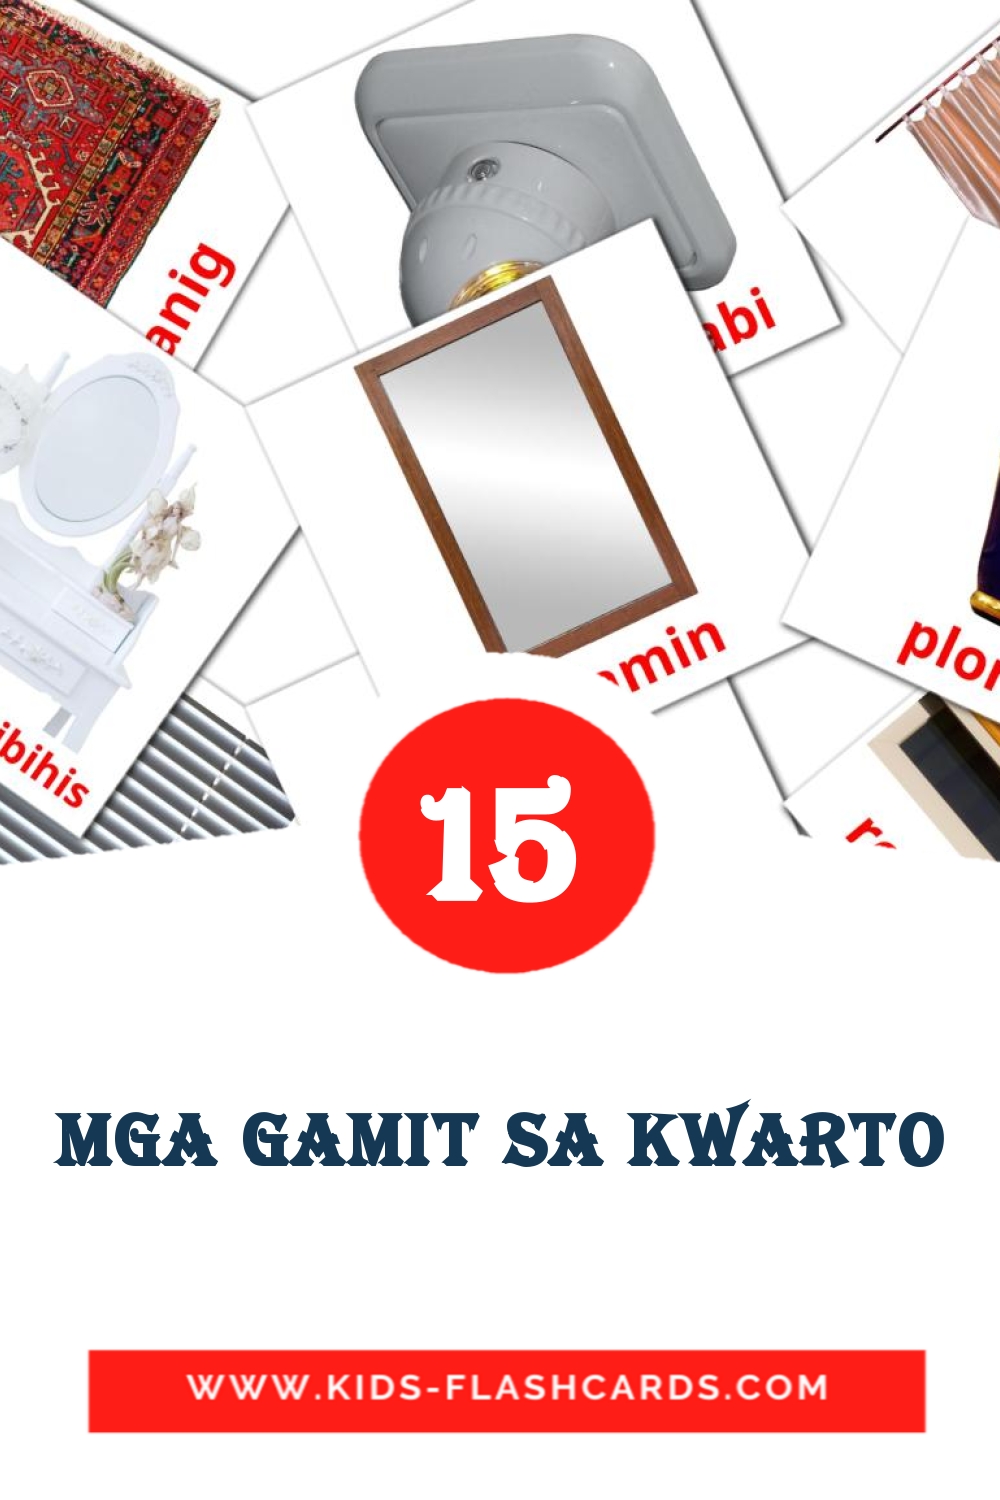 Mga gamit sa kwarto на филиппинском для Детского Сада (15 карточек)